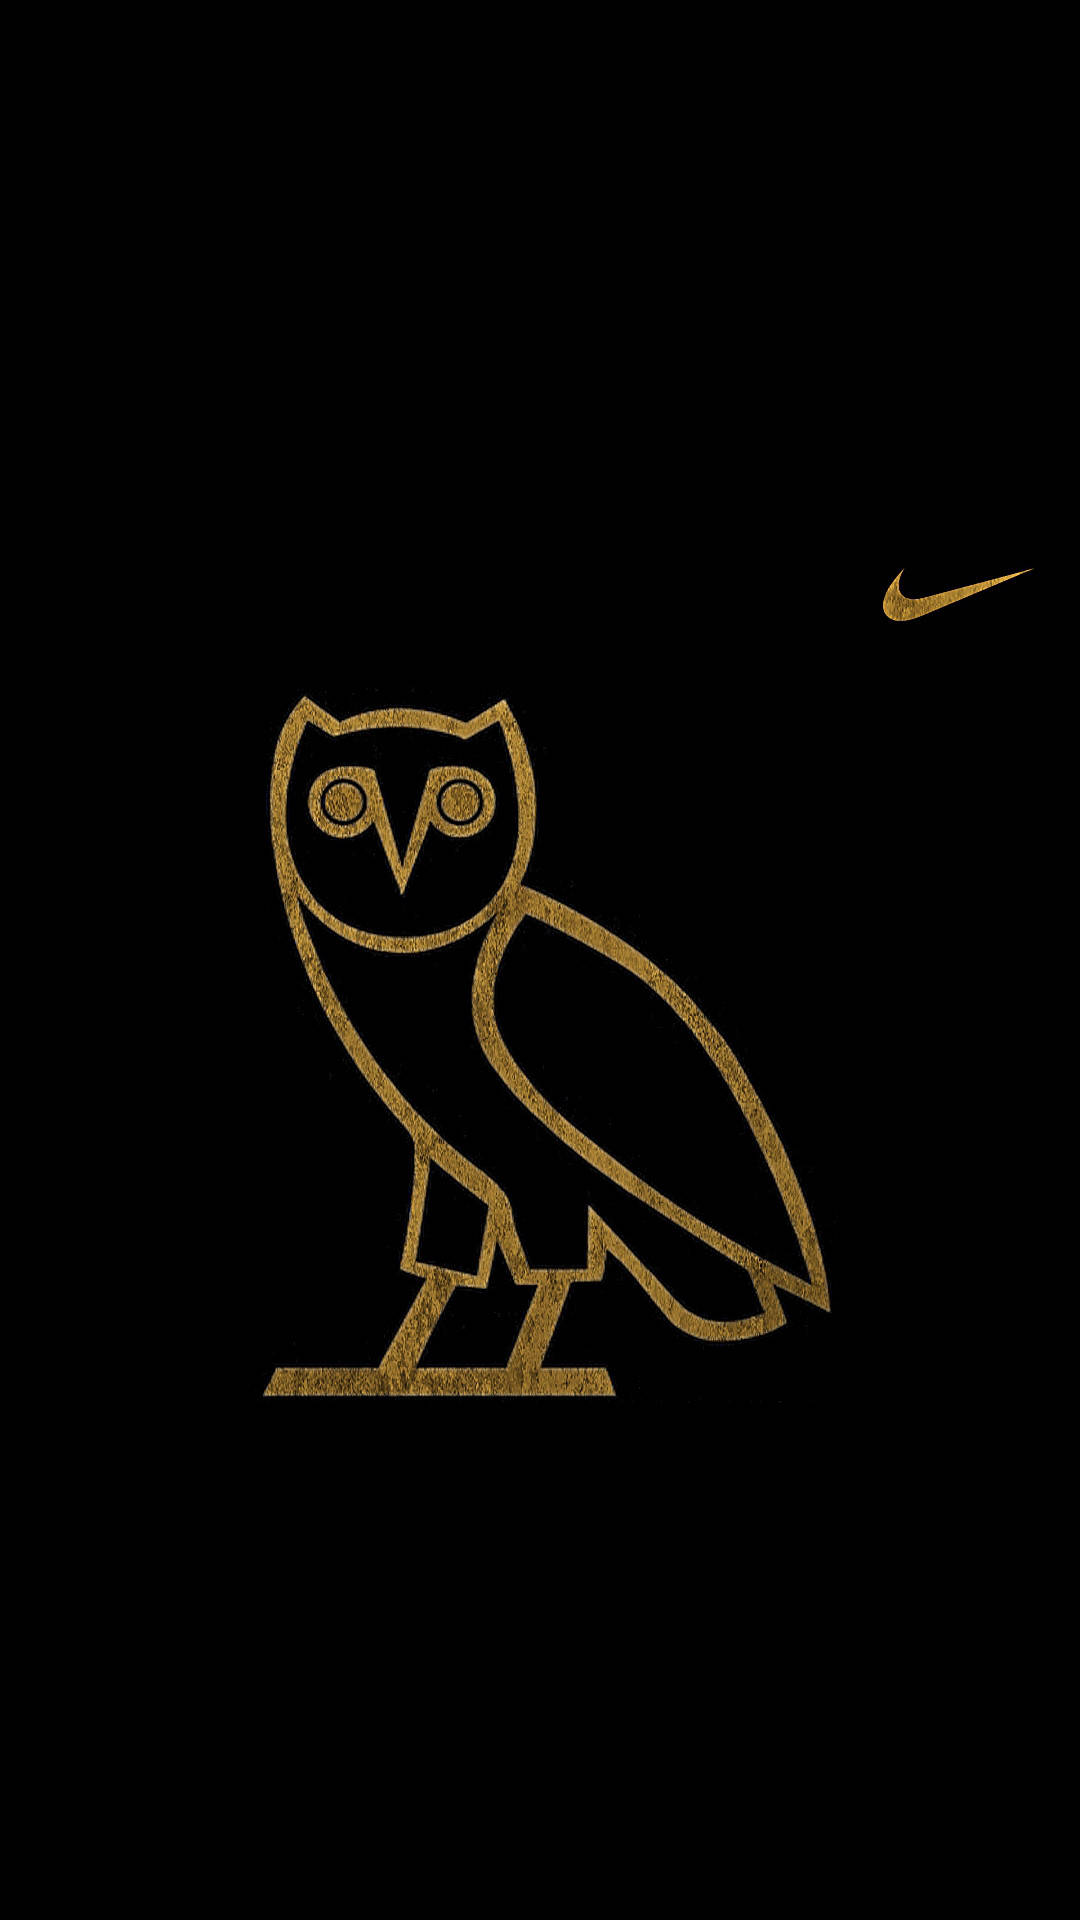 Swoosh Logo With Owl Wallpaper